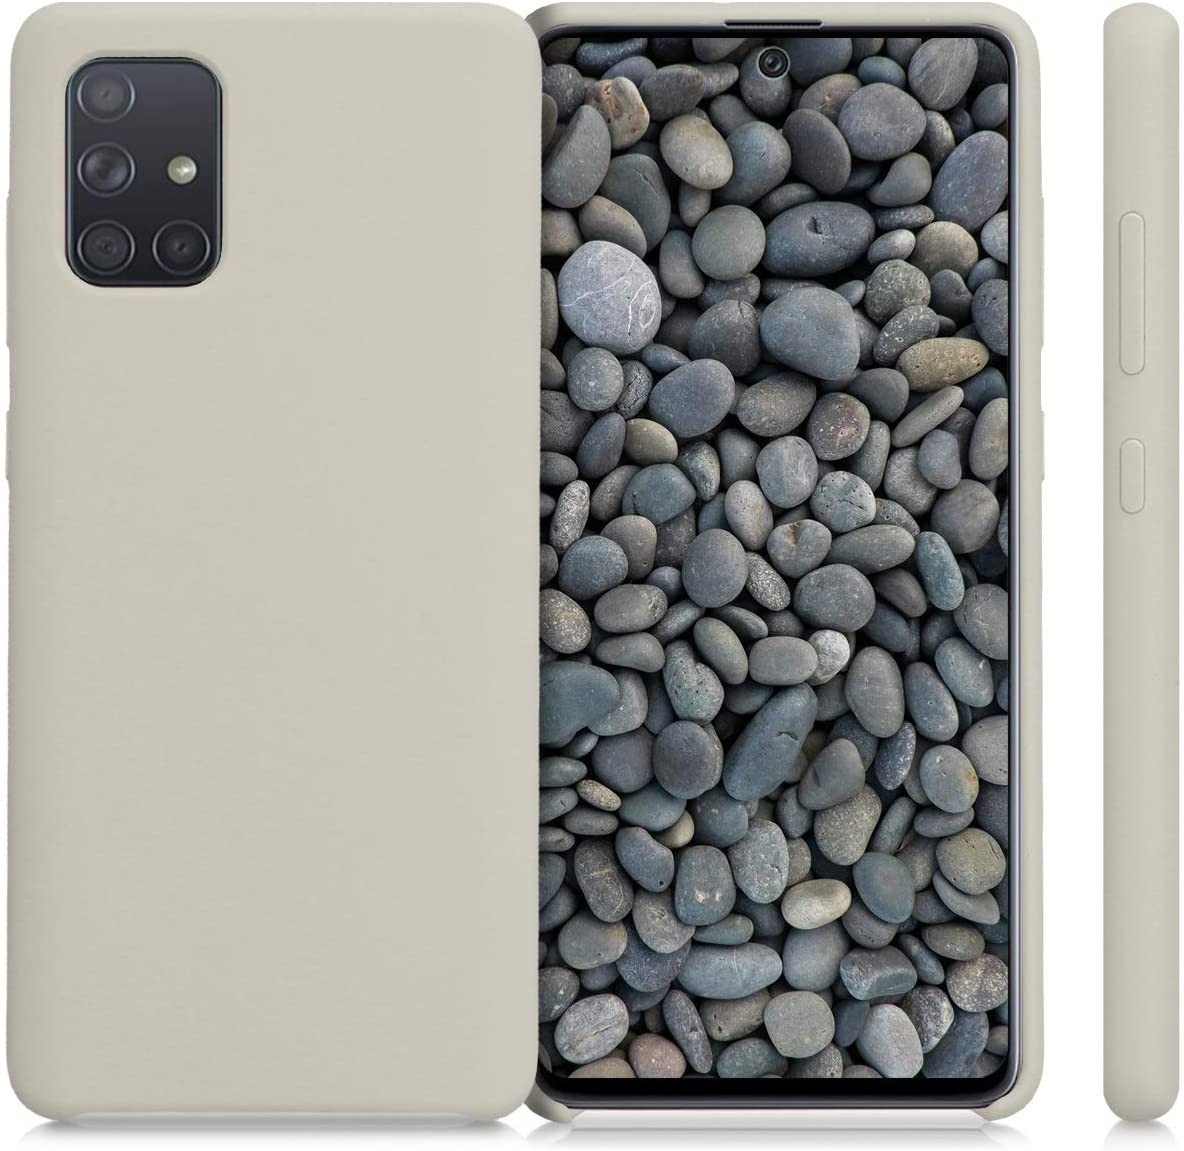 Husa protectie pentru Samsung Galaxy A72 5G ultra slim din silicon Gri,silk touch, interior din catifea